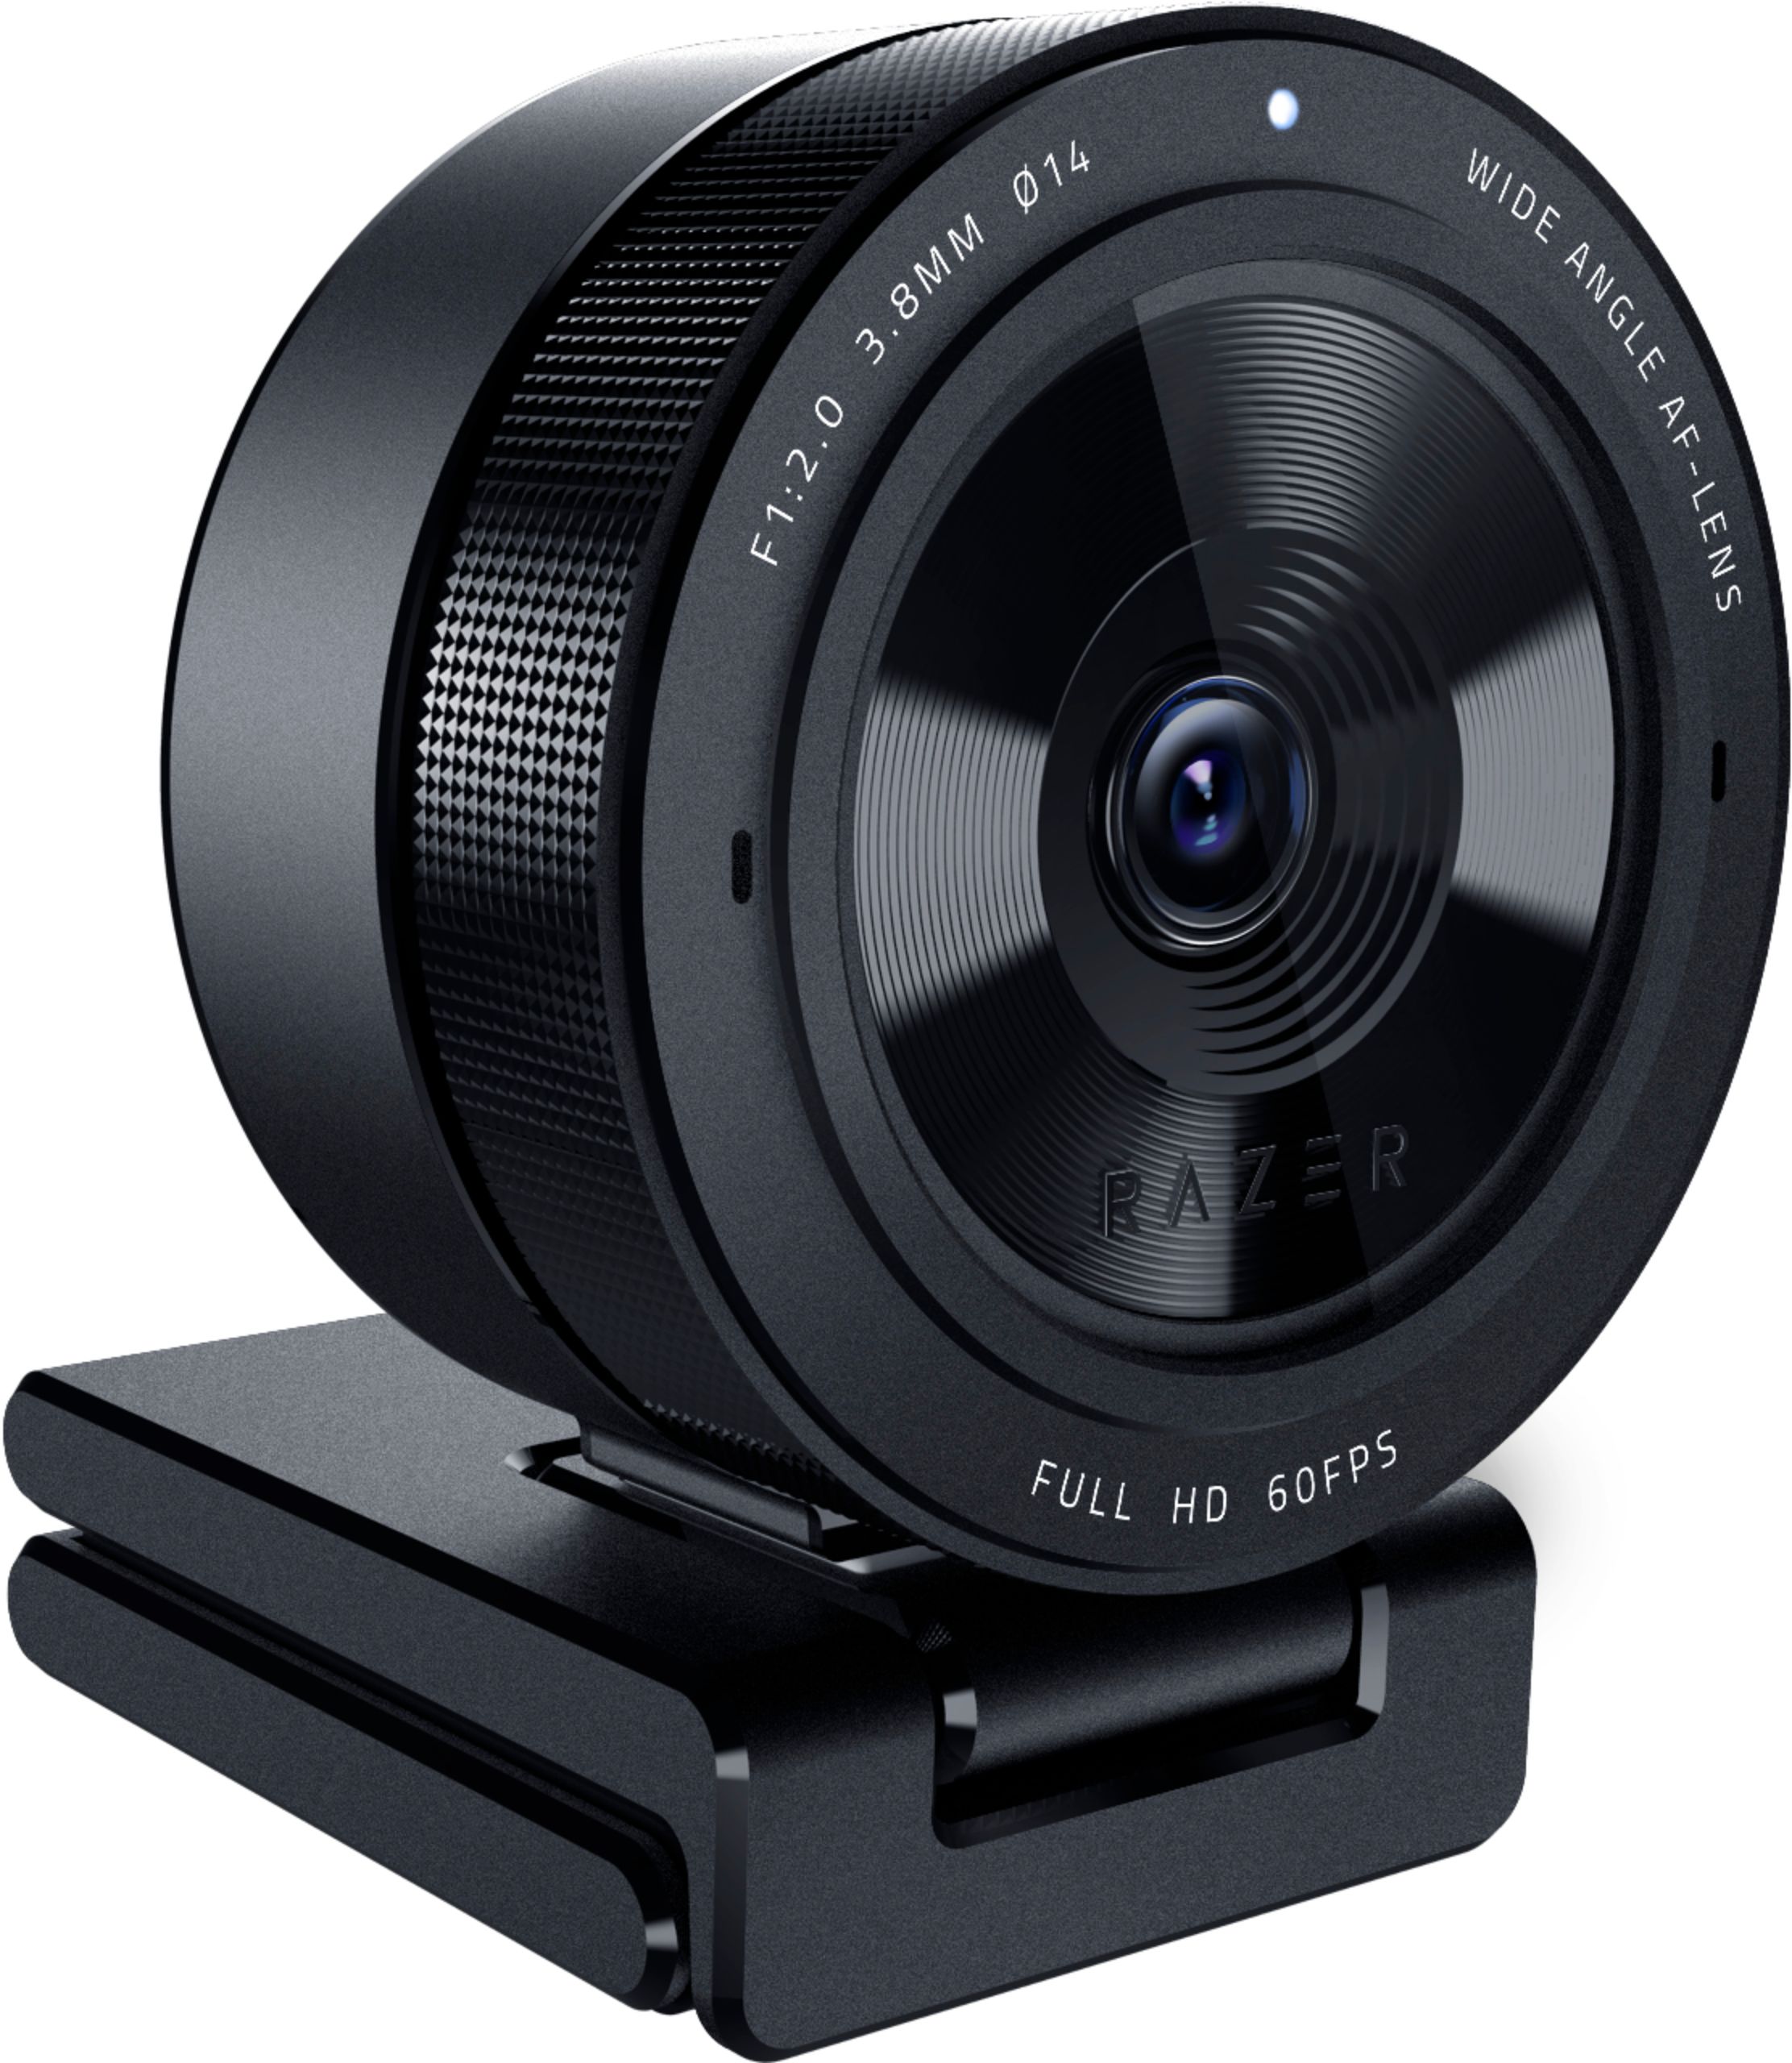 Razer Kiyo 1080p Streaming Gaming Camera with LED Ring Light - Black